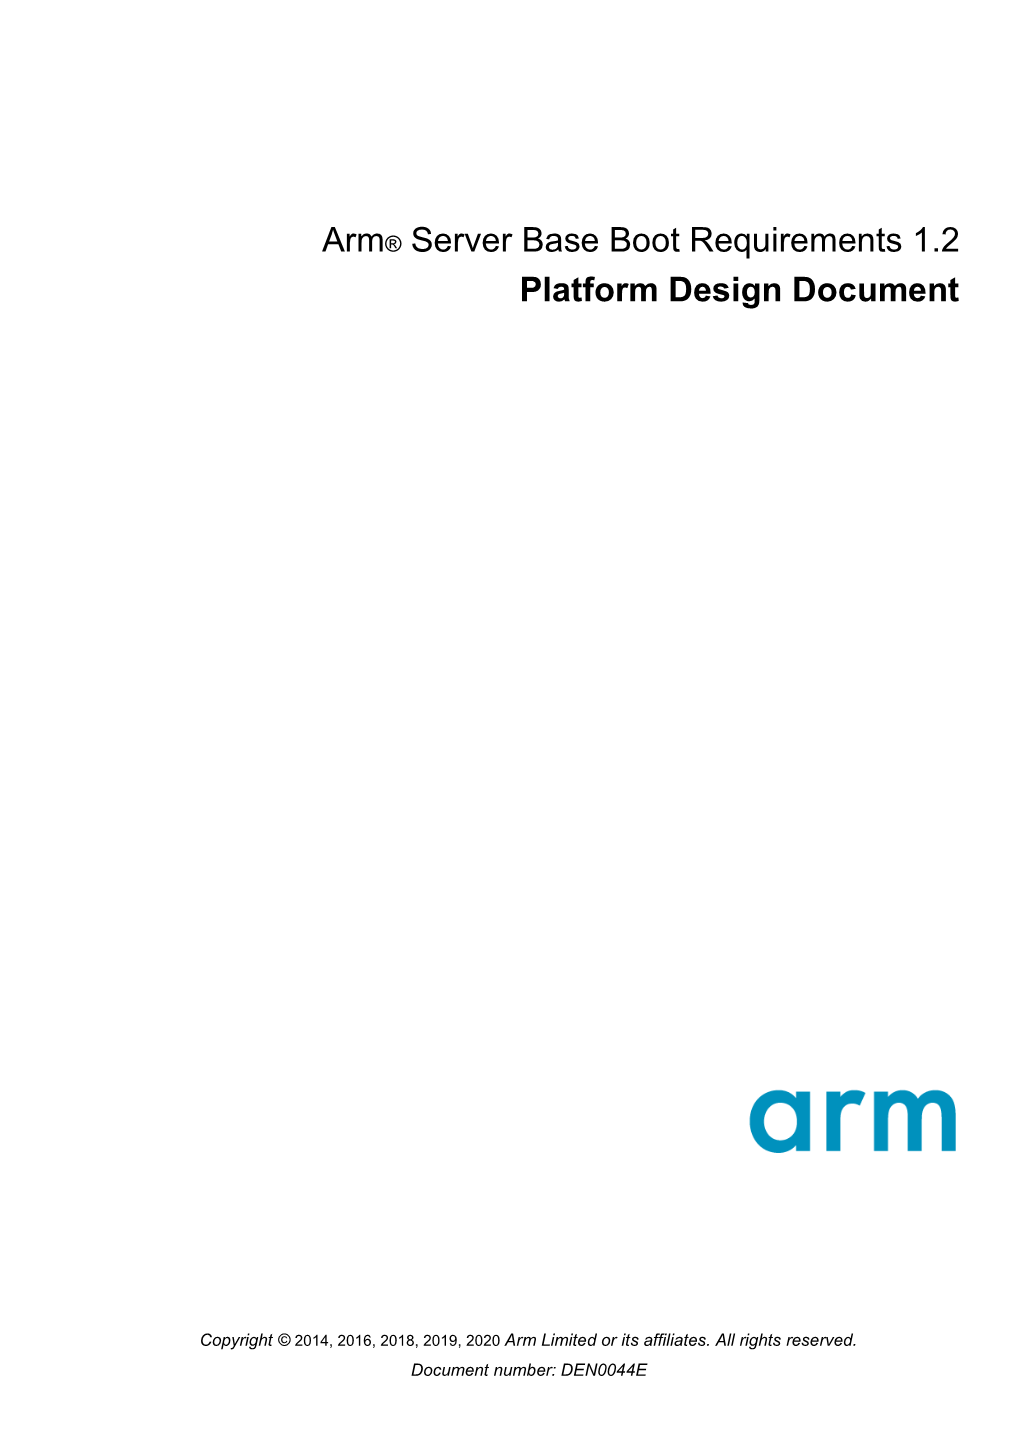 Server Base Boot Requirements 1.2 Platform Design Document